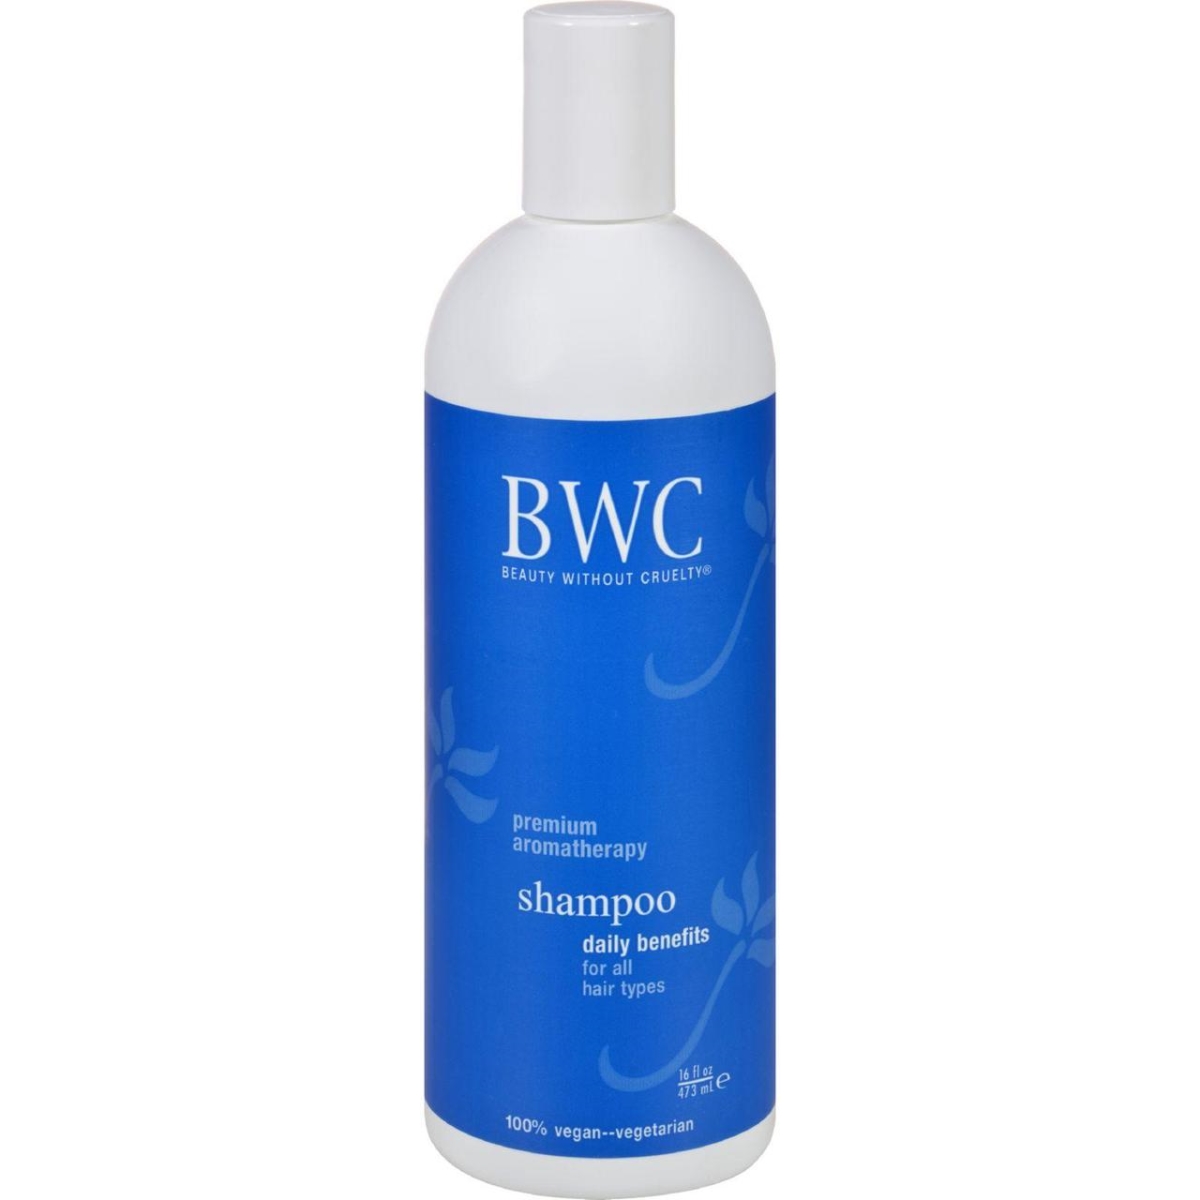 Hg0537449 16 Fl Oz Daily Benefits Shampoo